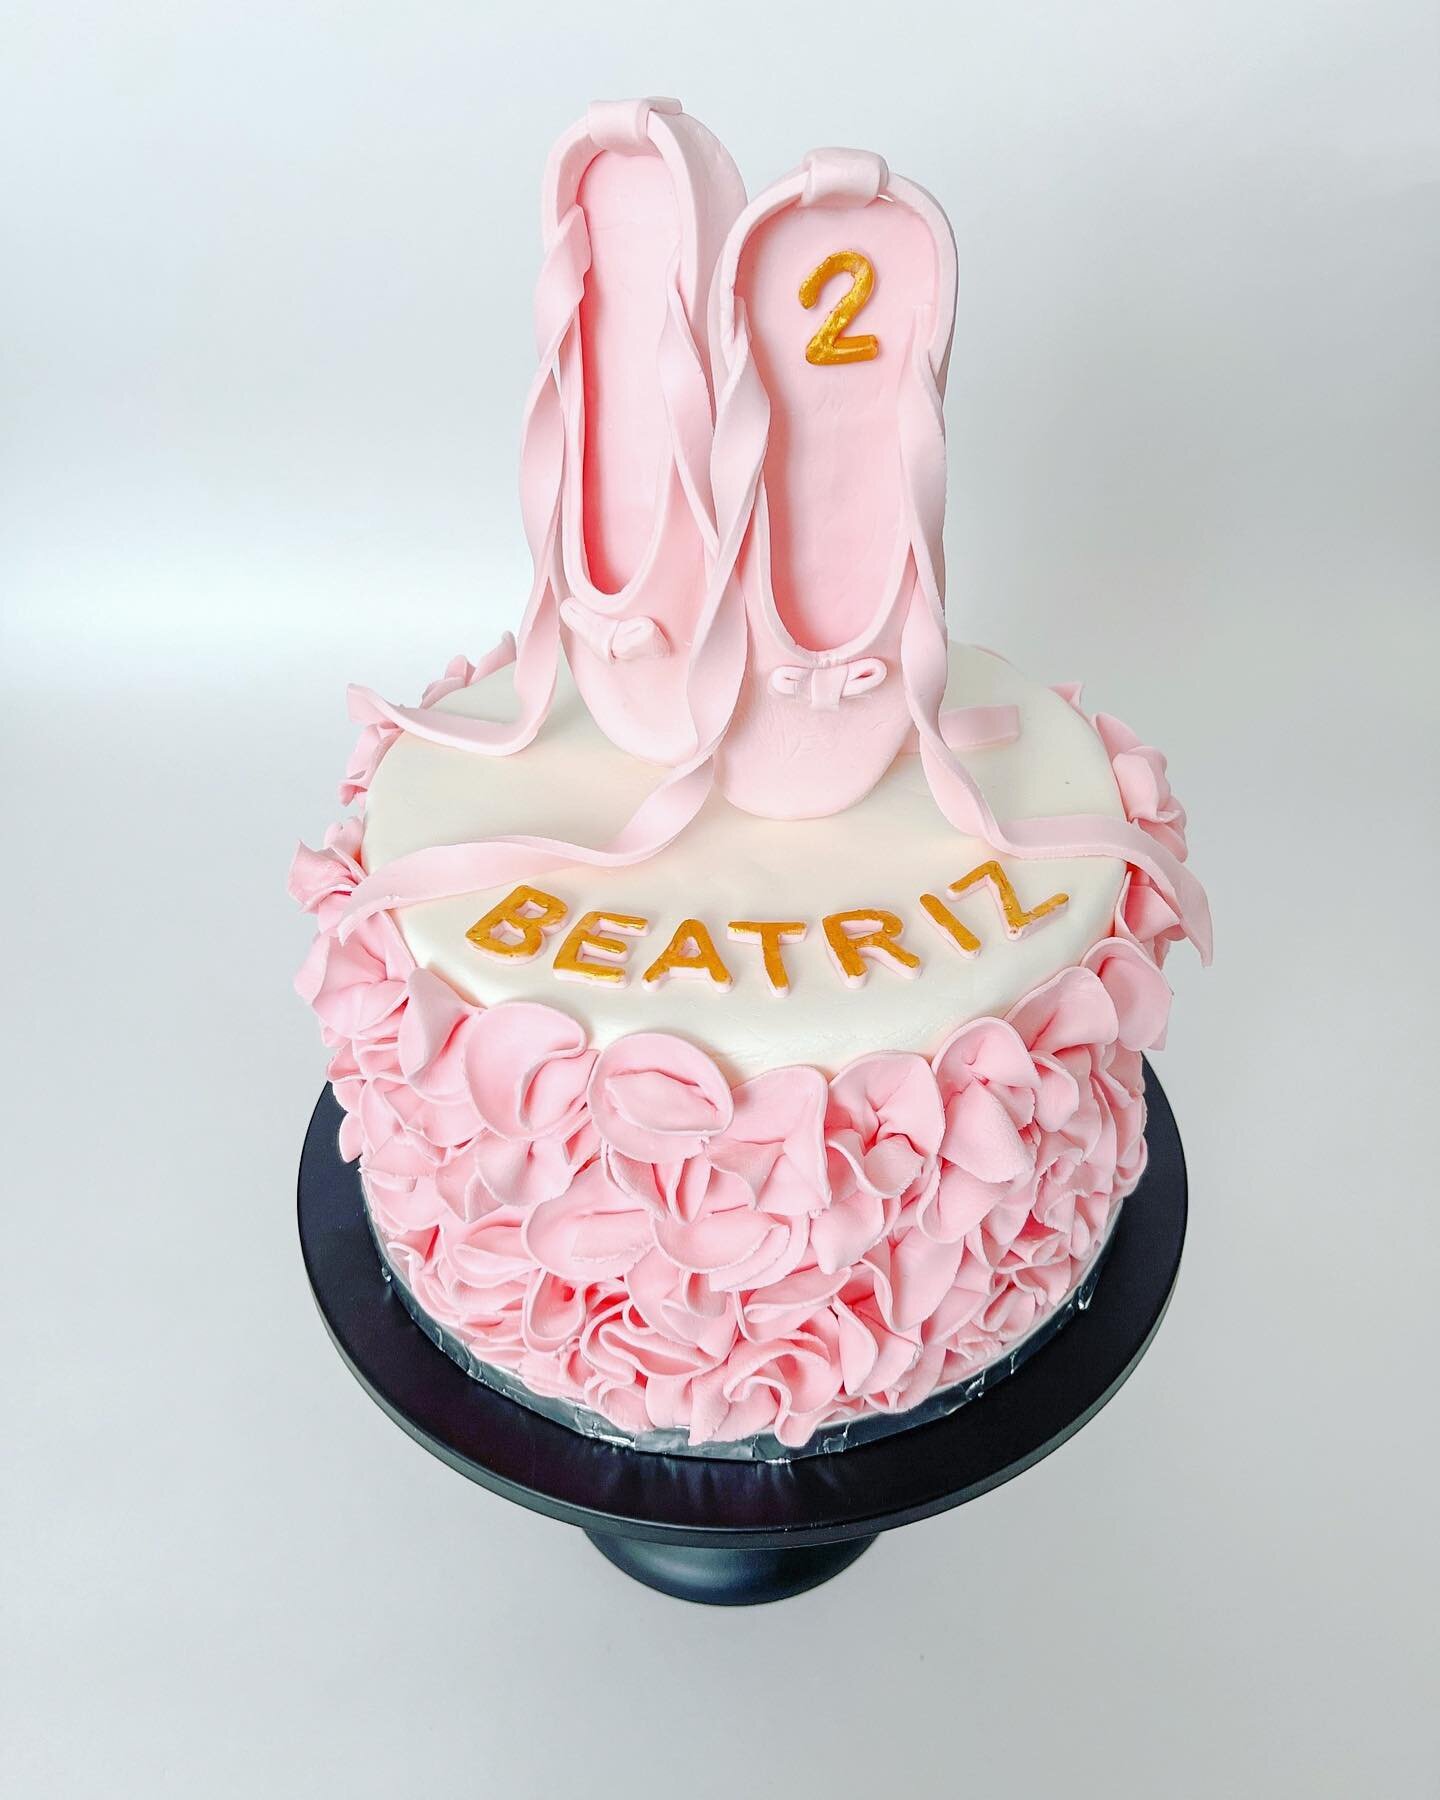 Ballerina cake with ruffles! #vanillacake #dulcedelechefilling #beijinhodecocofilling #buttercream #pinkcake #